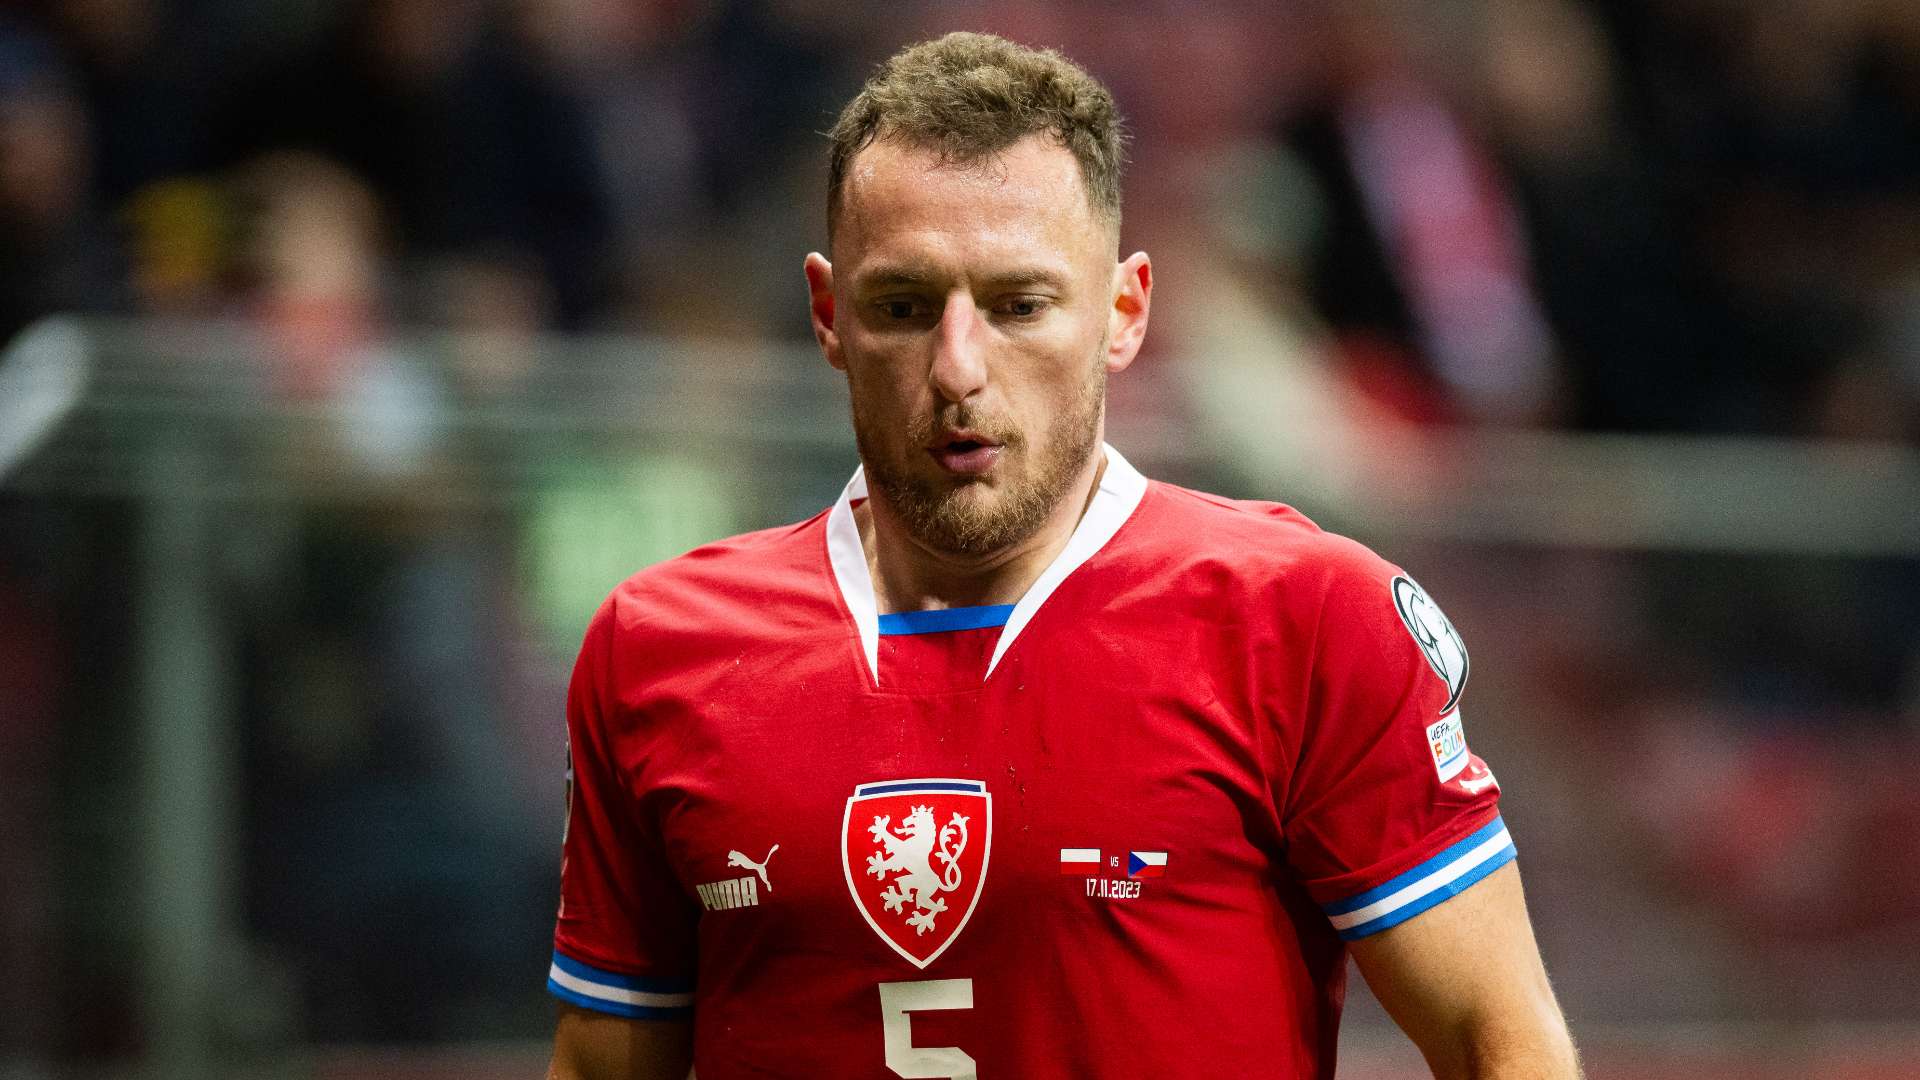 West Ham star Vladimir Coufal has been sent home from Czech Republic duty